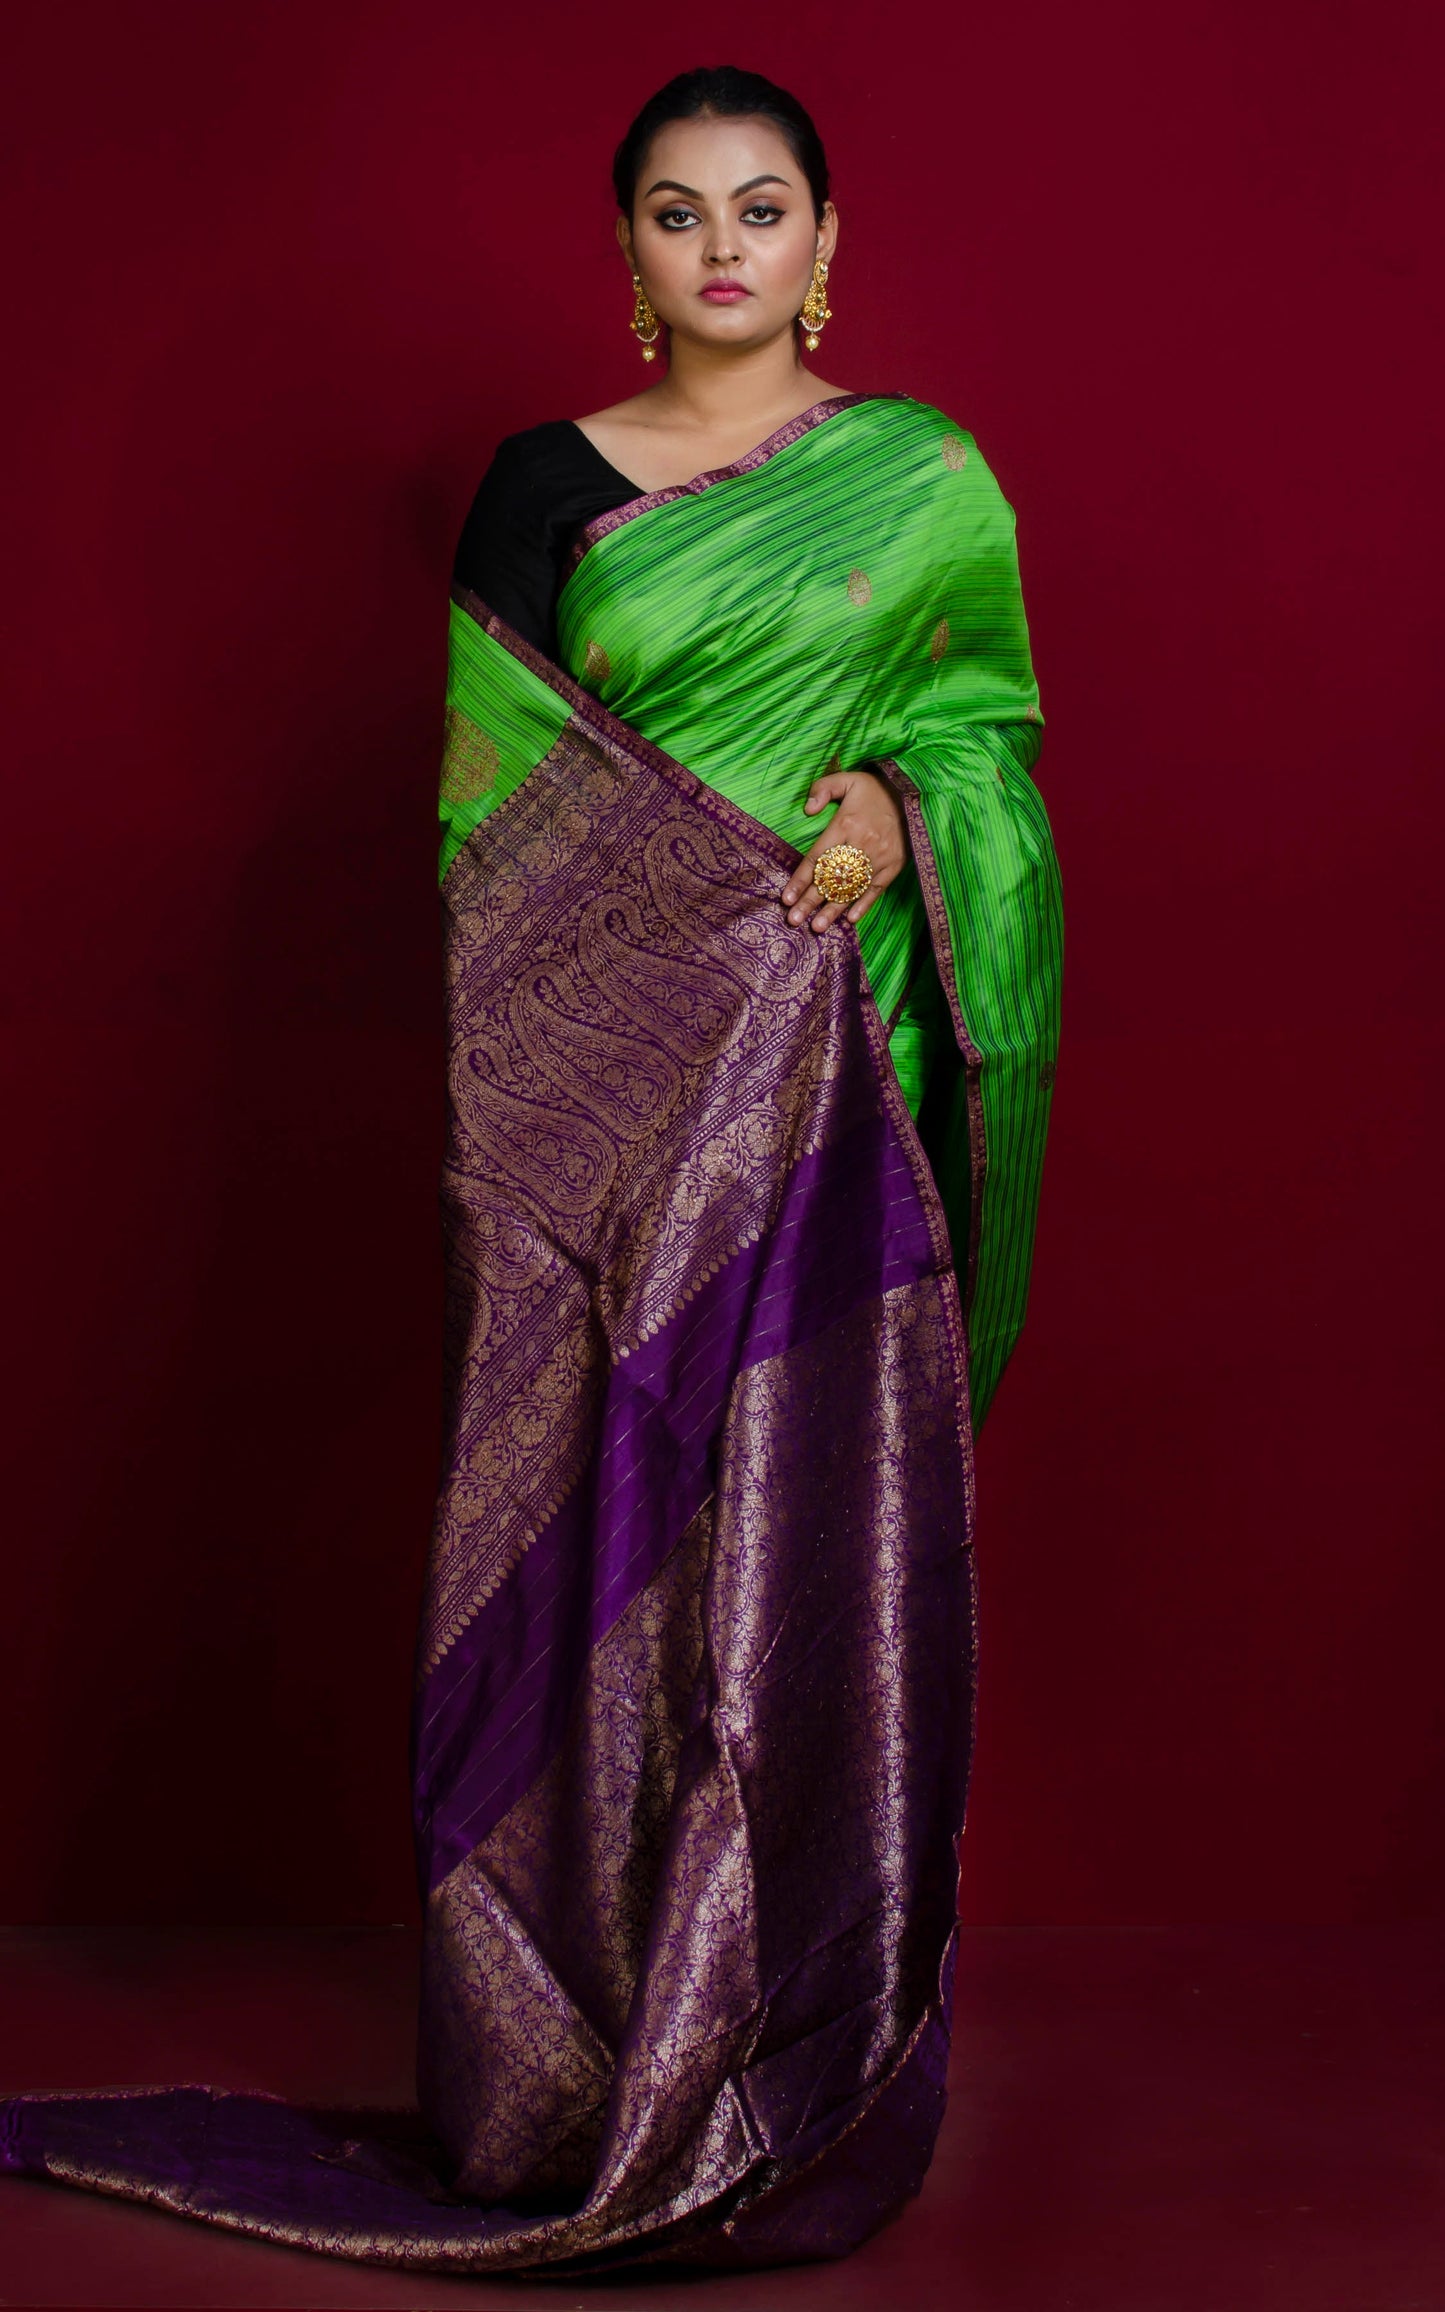 Woven Thread Nakshi Work Koniya Motif Pure Katan Banarasi Silk Saree in Green, Indigo Blue and Antique Gold